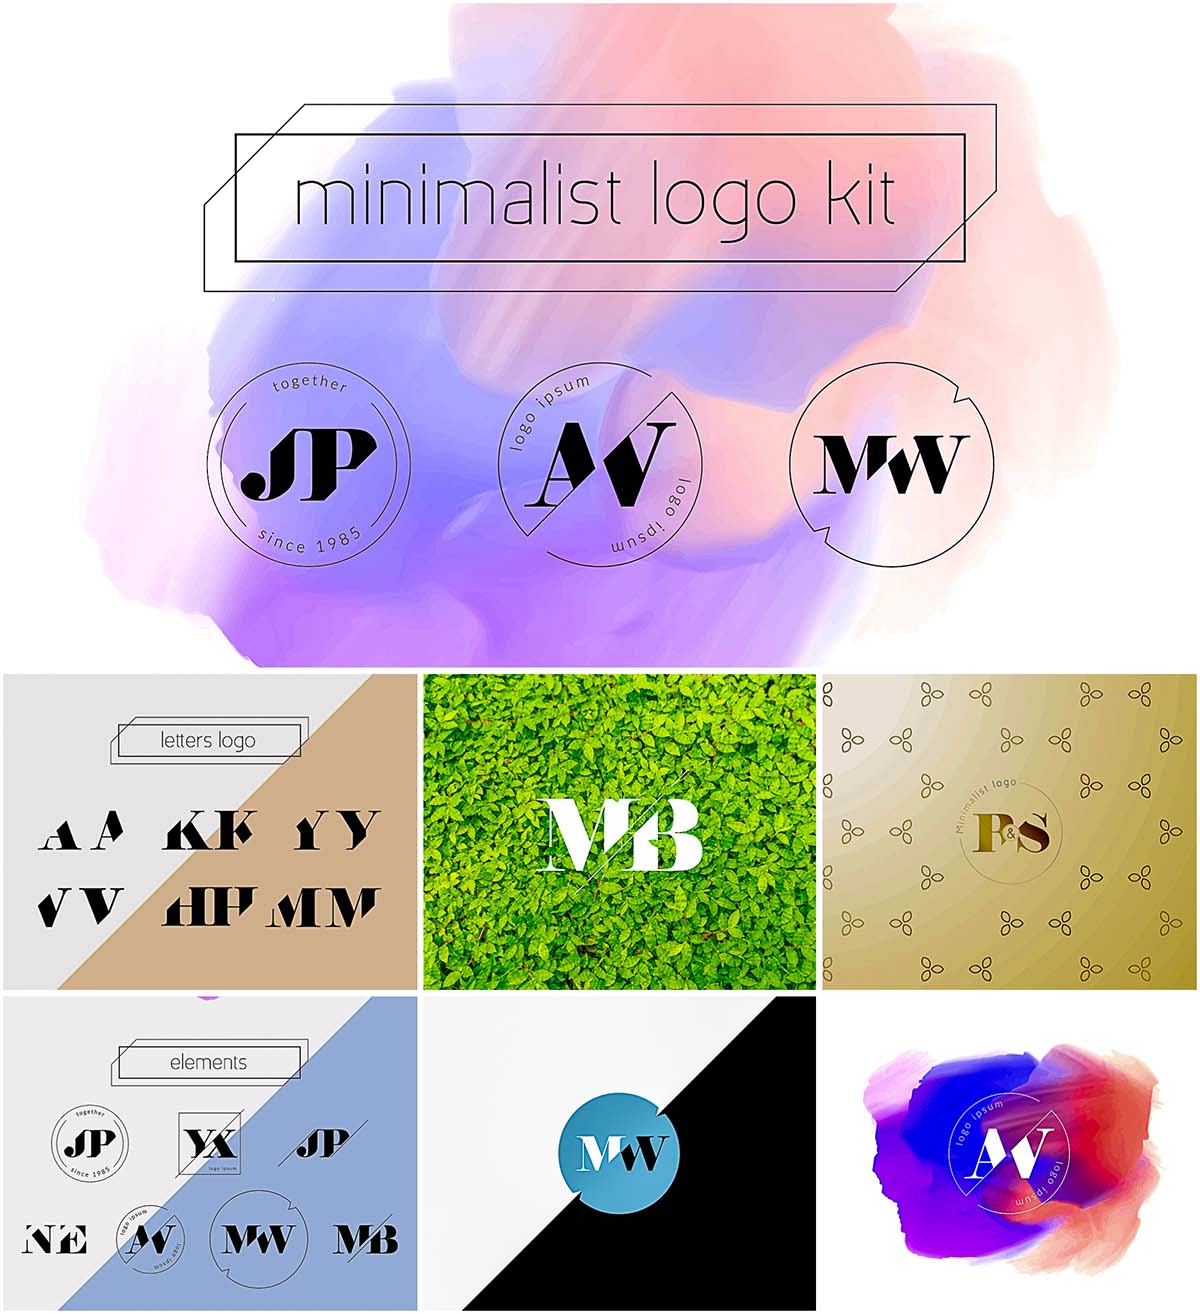 Minimalist logo kit with stamps